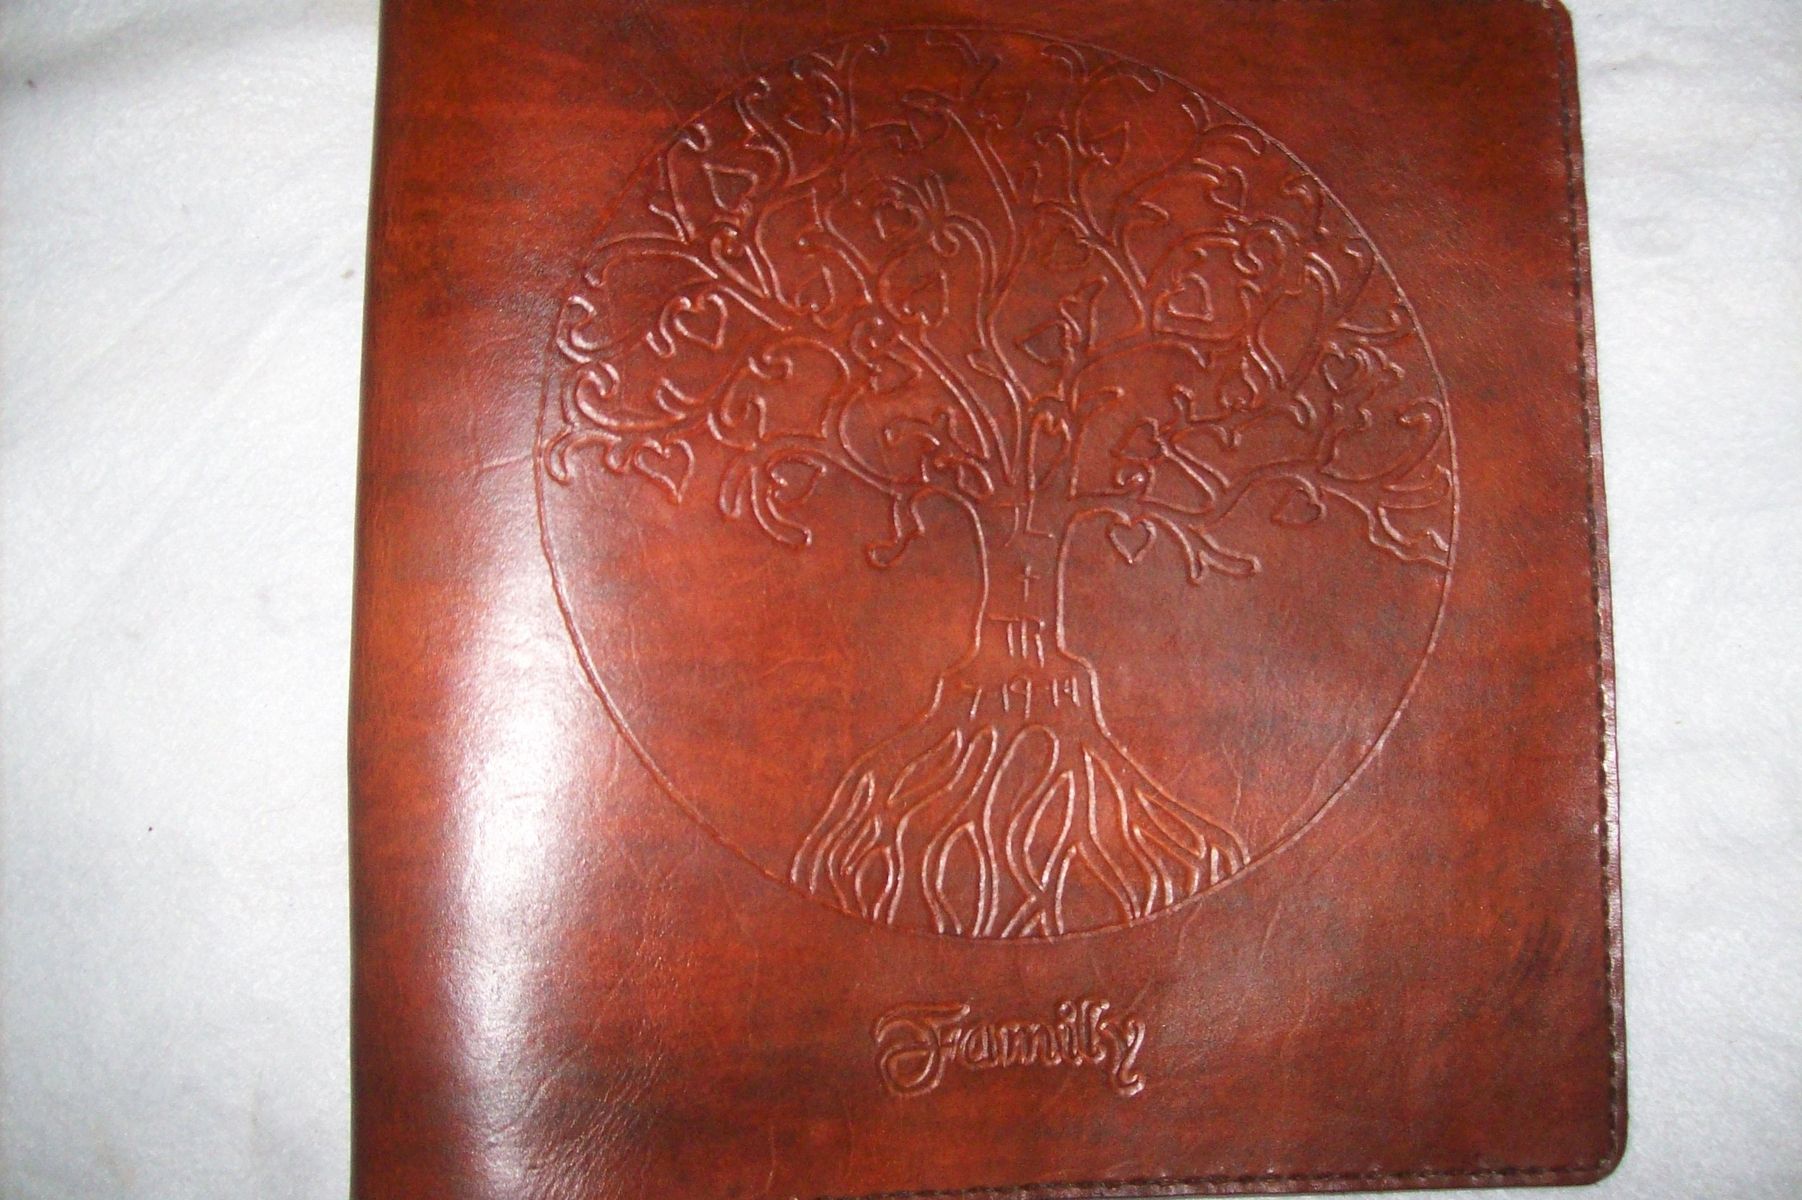 3rd Leather Anniversary Gift Handmade Travel Book Personalized Scrapbook Album PUERTO RICO 1FS Leather Photo Album